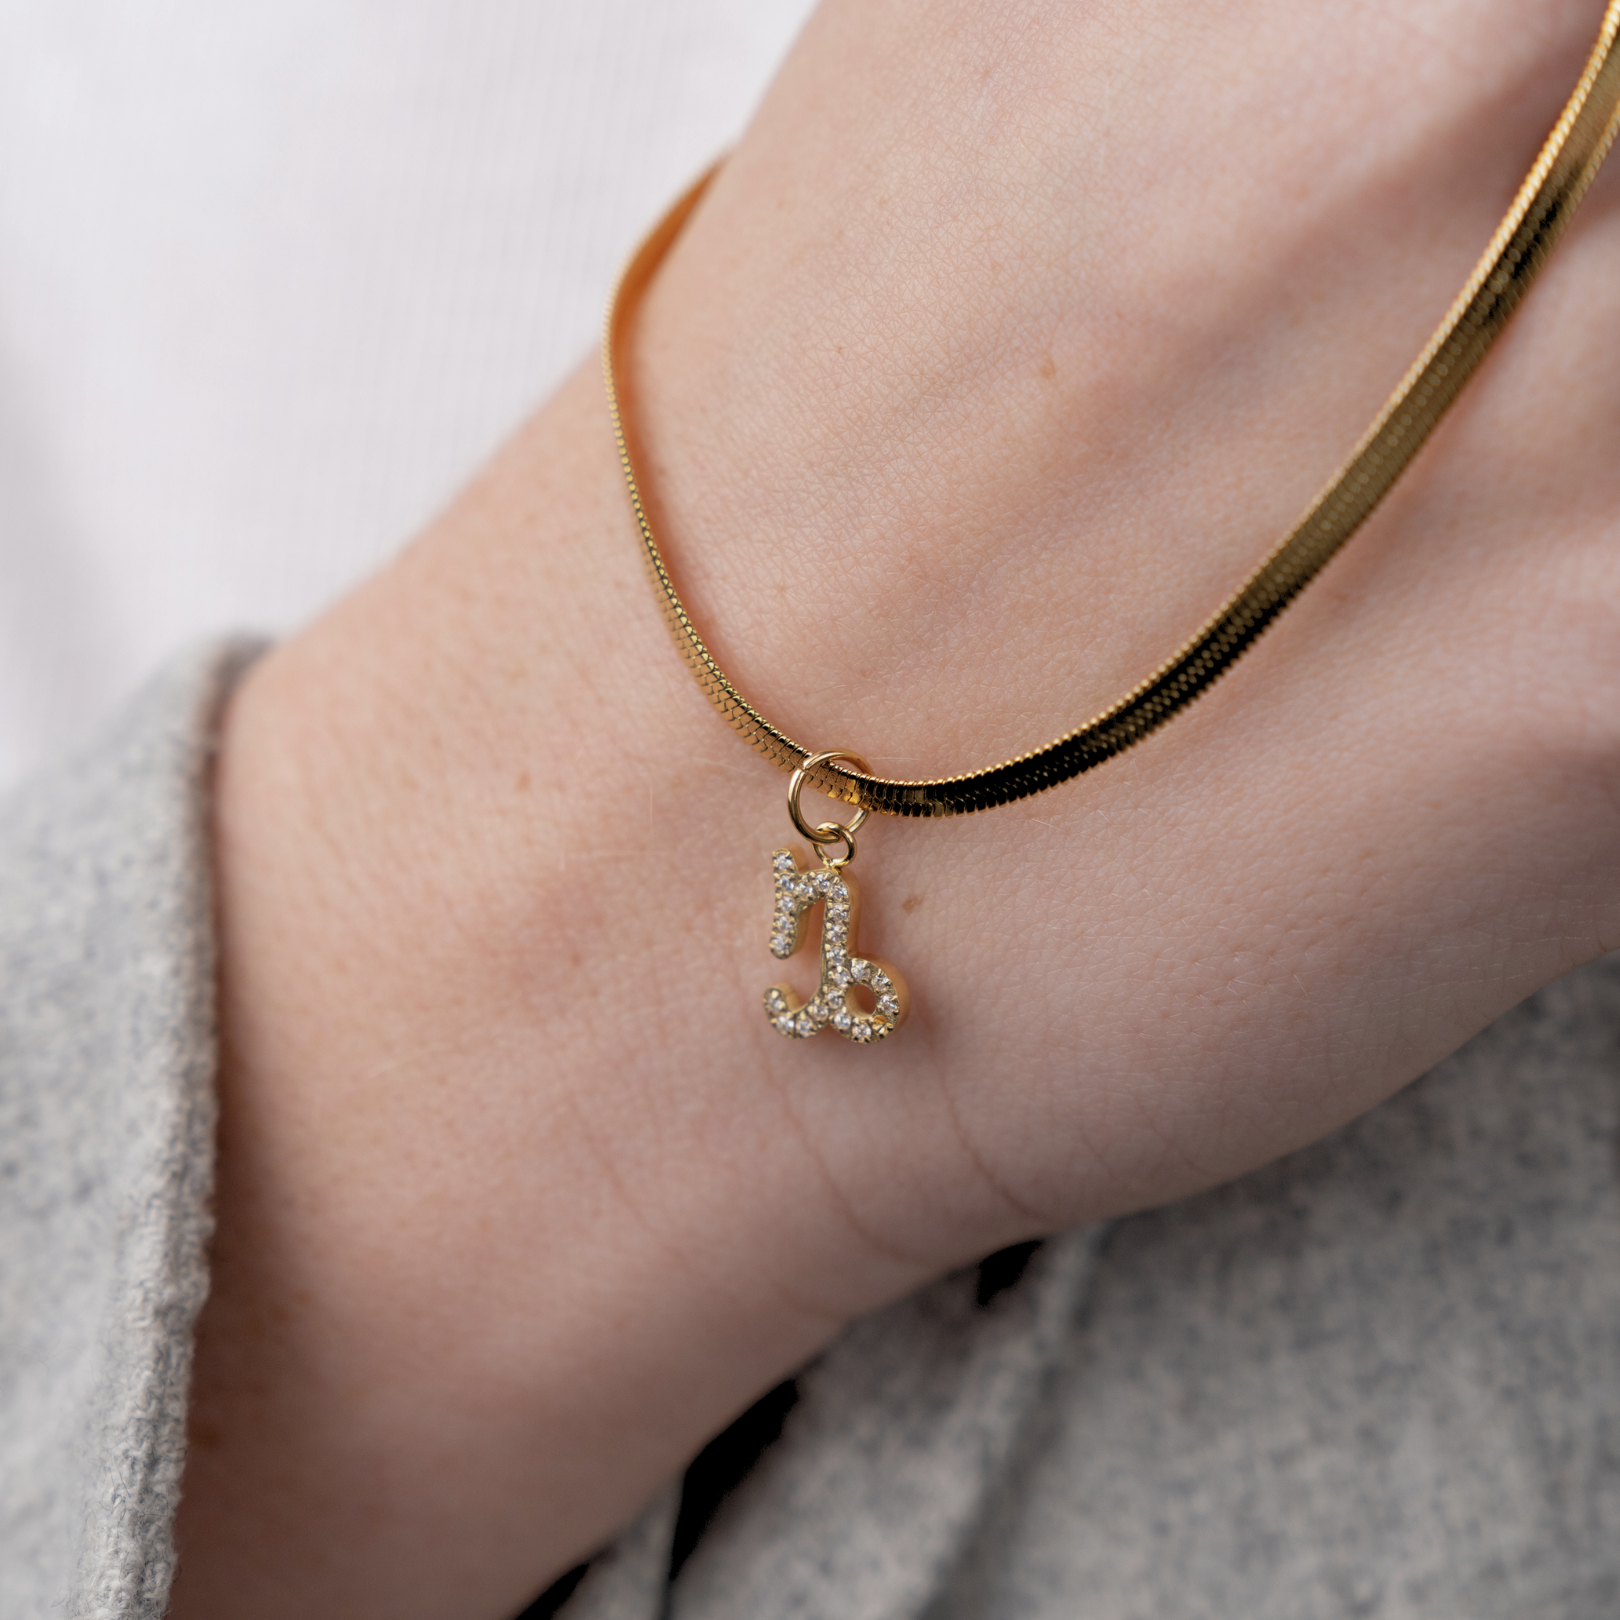 Zodiac Star Sign Necklace - Snake Chain Necklace - La Musa Jewellery